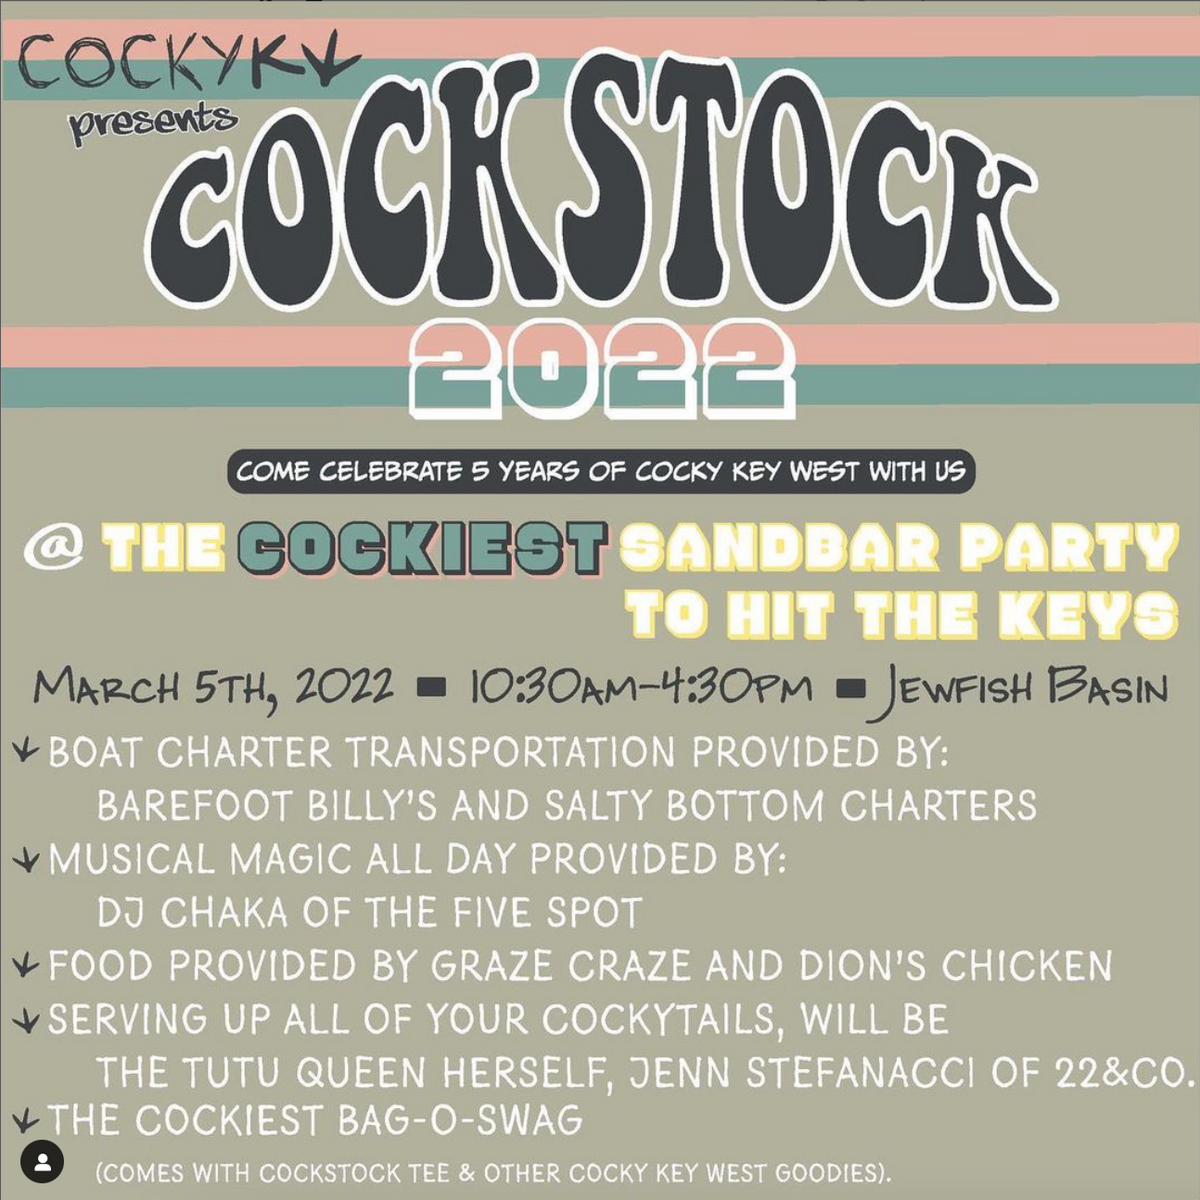 #131 - Cocky Key West's Cockiest Sandbar Party to hit the Keys